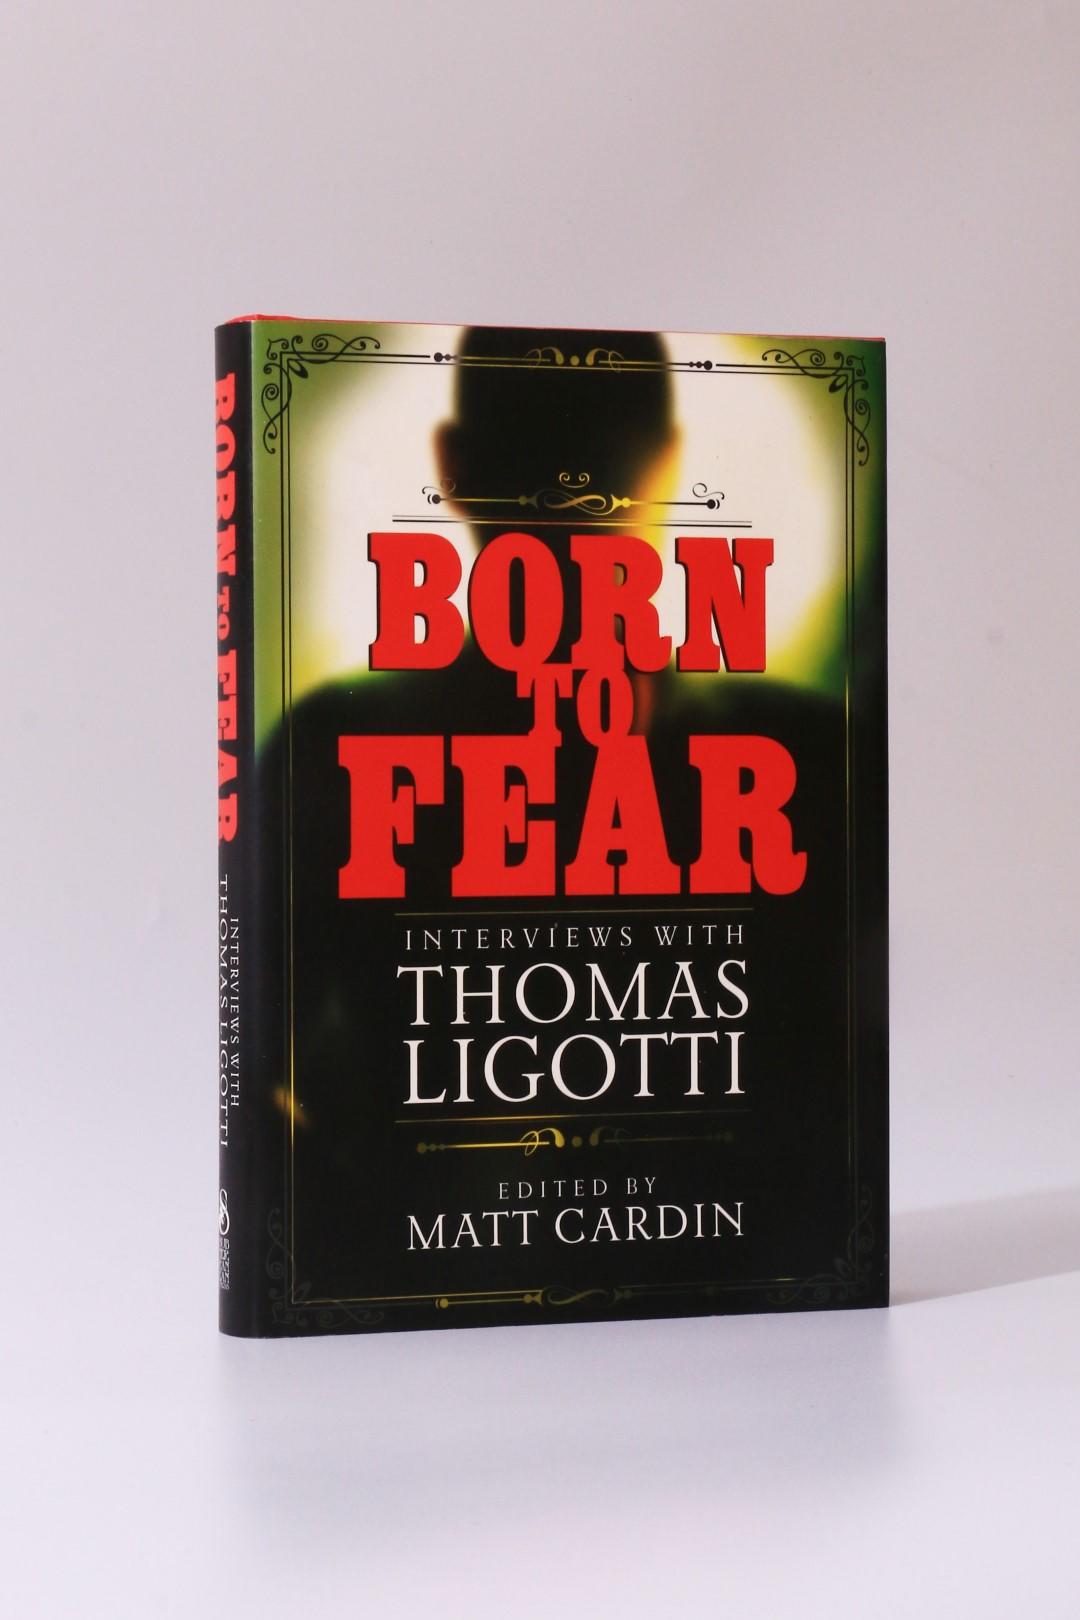 Matt Cardin [ed.] Thomas Ligotti Interest - Born to Fear: Interviews with Thomas Ligotti - Subterranean Press, 2014, First Edition.